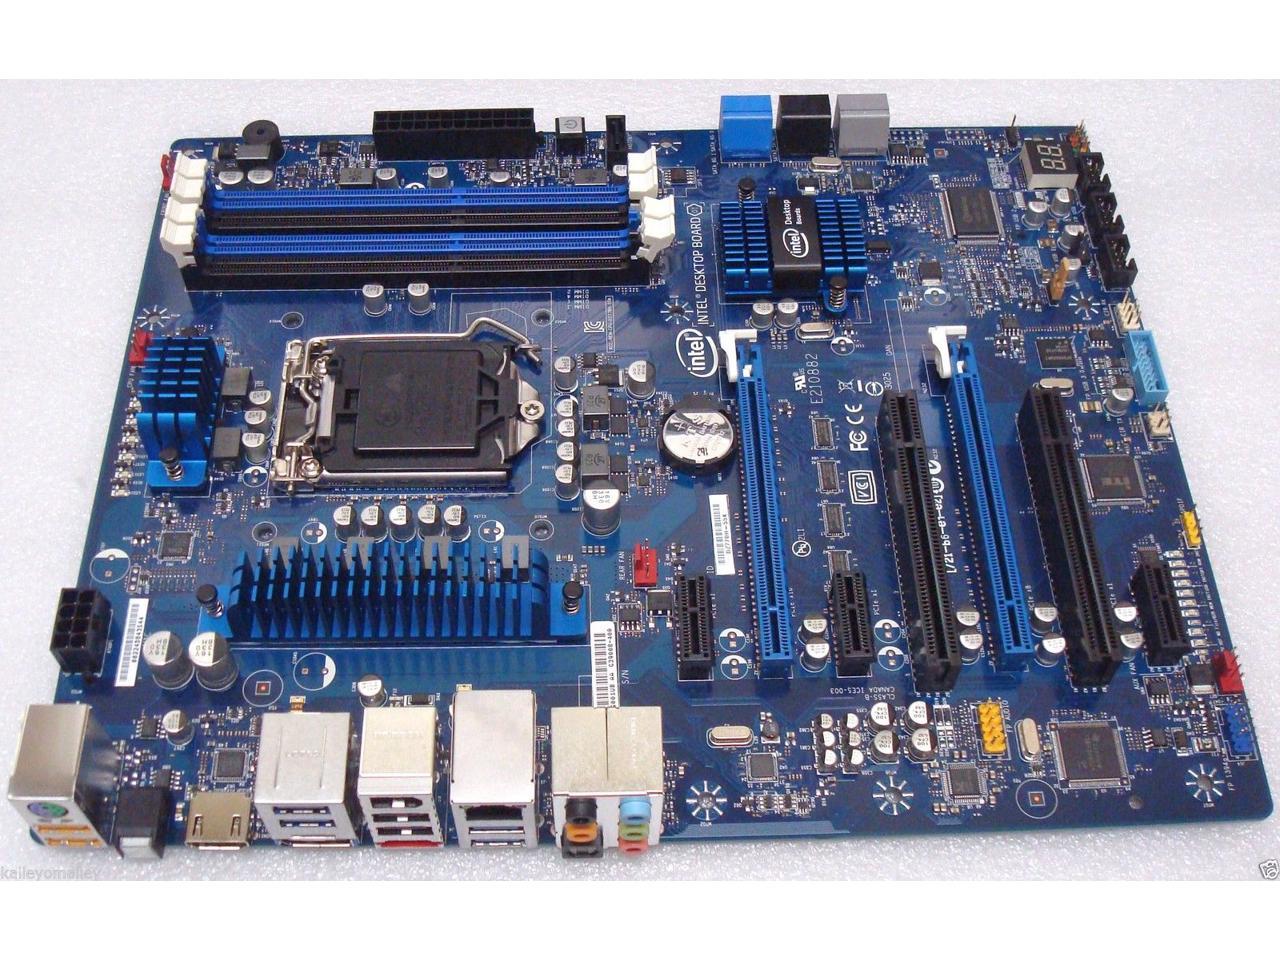 Intel BLKDZ77BH-55K Z77 Express Socket LGA1155 32GB DDR3-1600MHz ATX Desktop Motherboard only